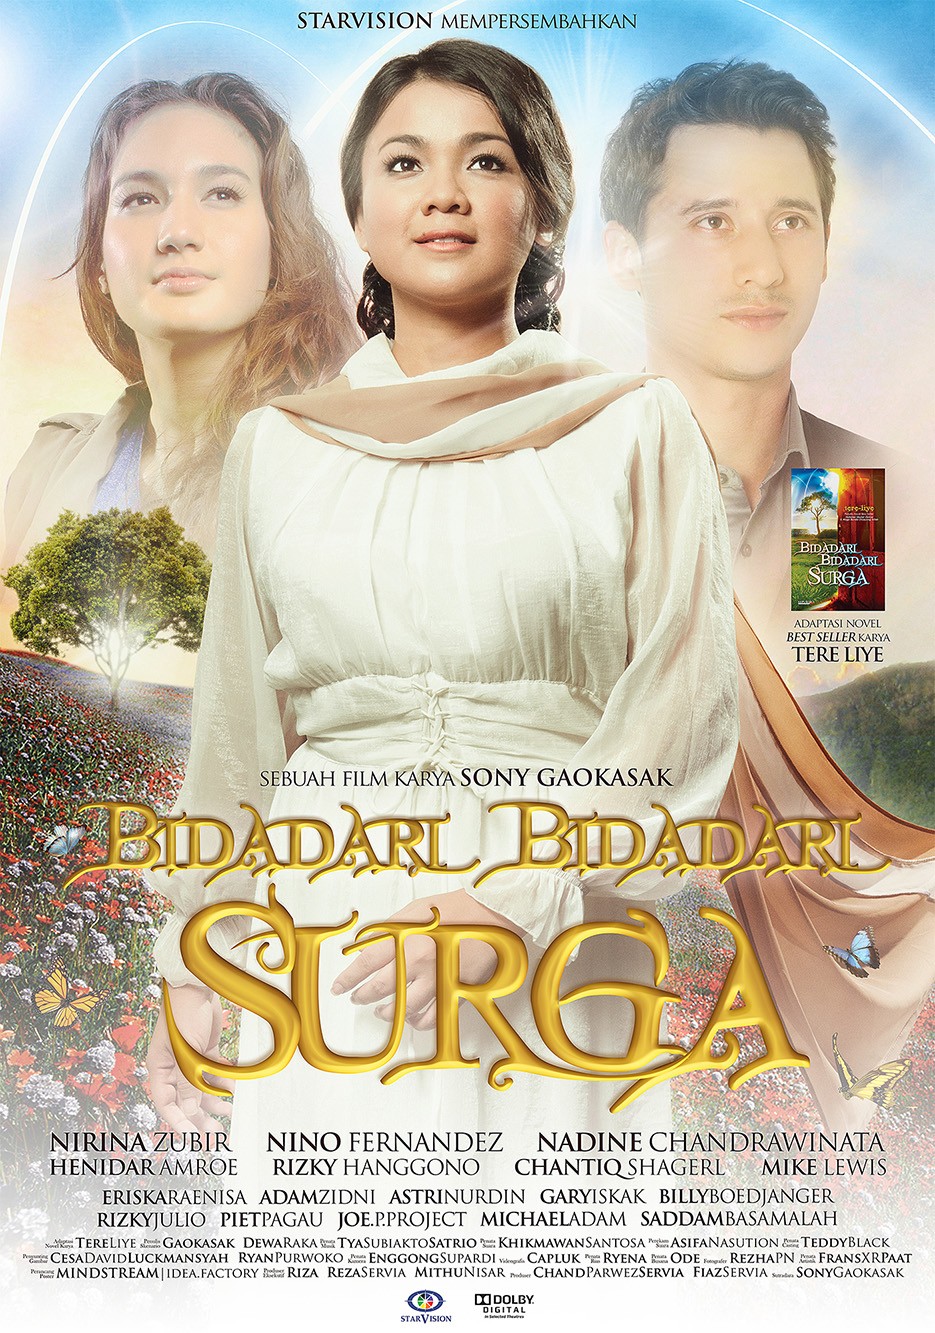 Extra Large Movie Poster Image for Bidadari-Bidadari Surga (#2 of 2)